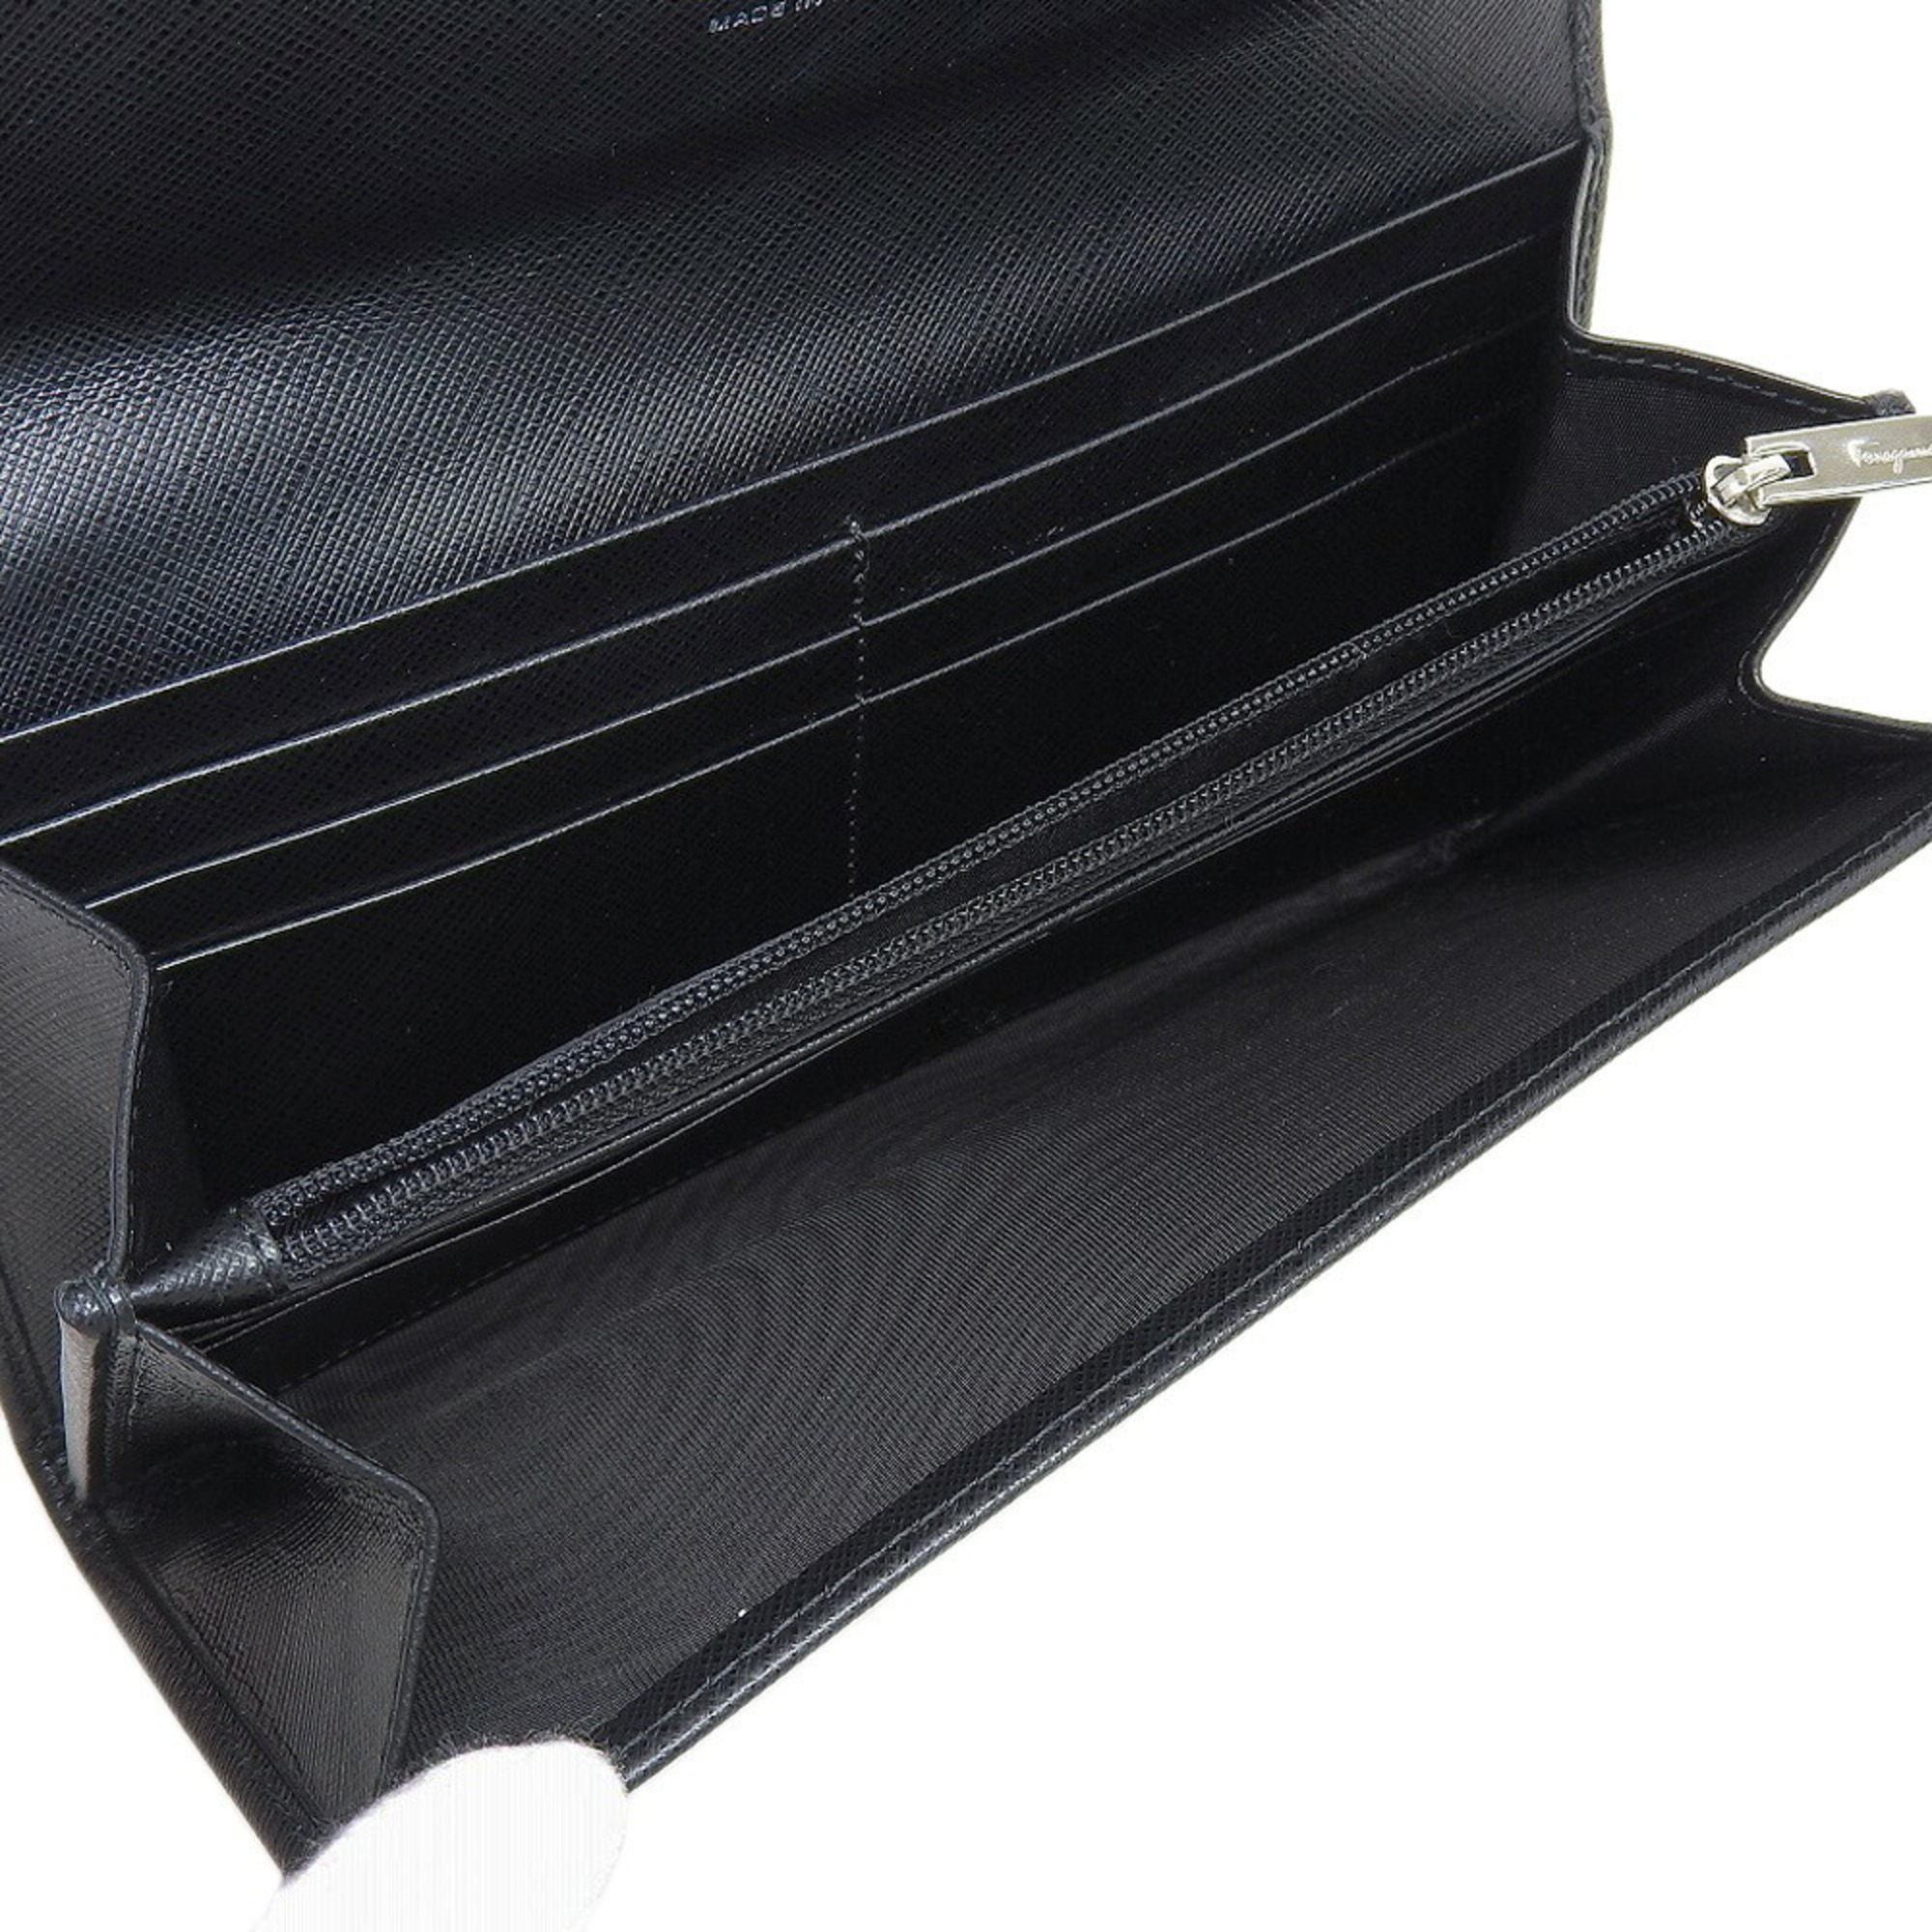 Salvatore Ferragamo Gancini long wallet leather black 227121 34